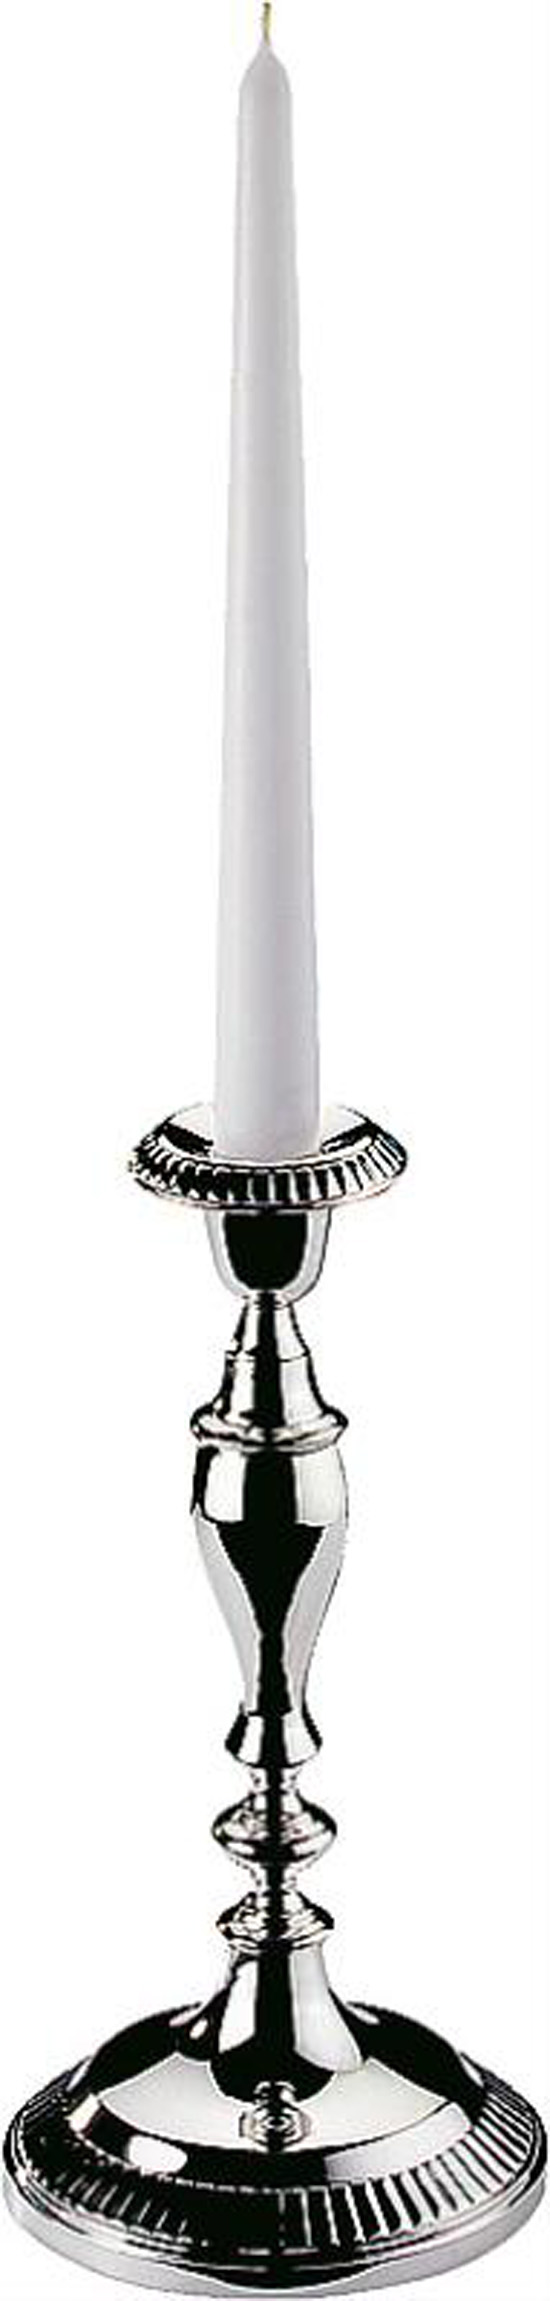 Candleholder - silver plated - Ø11 cm , height 22 cm